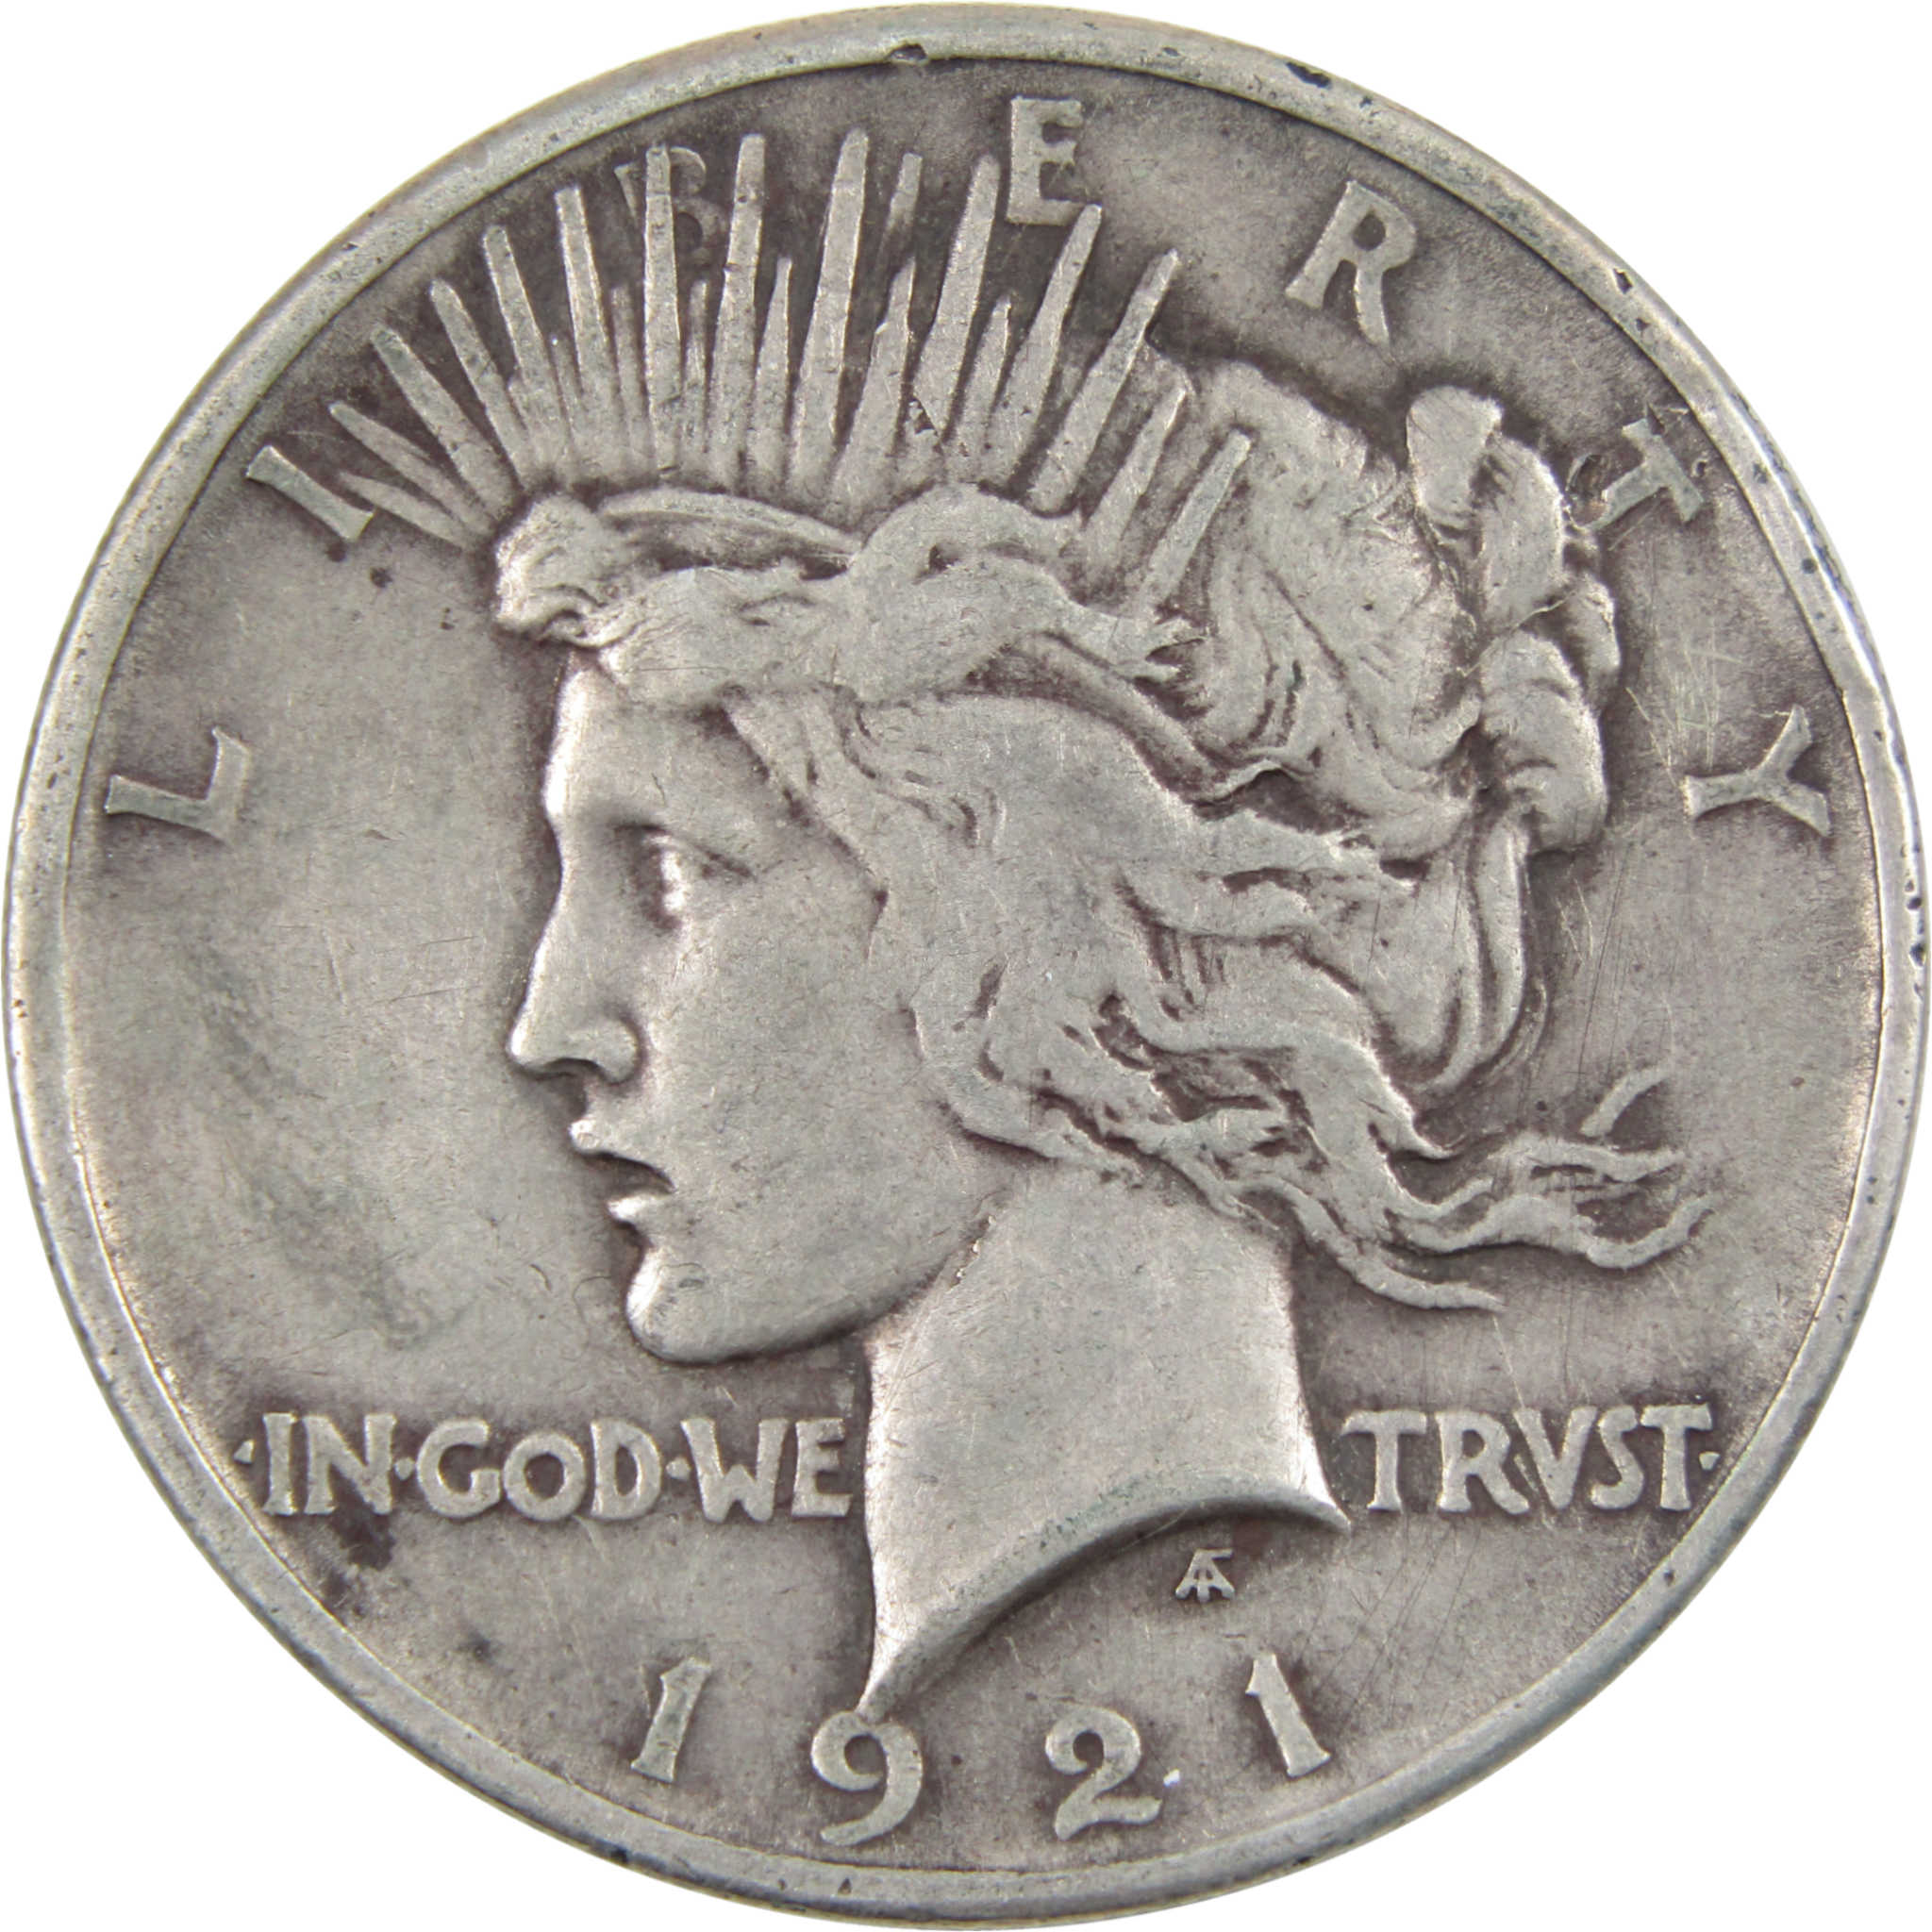 1921 High Relief Peace Dollar F Fine 90% Silver $1 Coin SKU:I3459